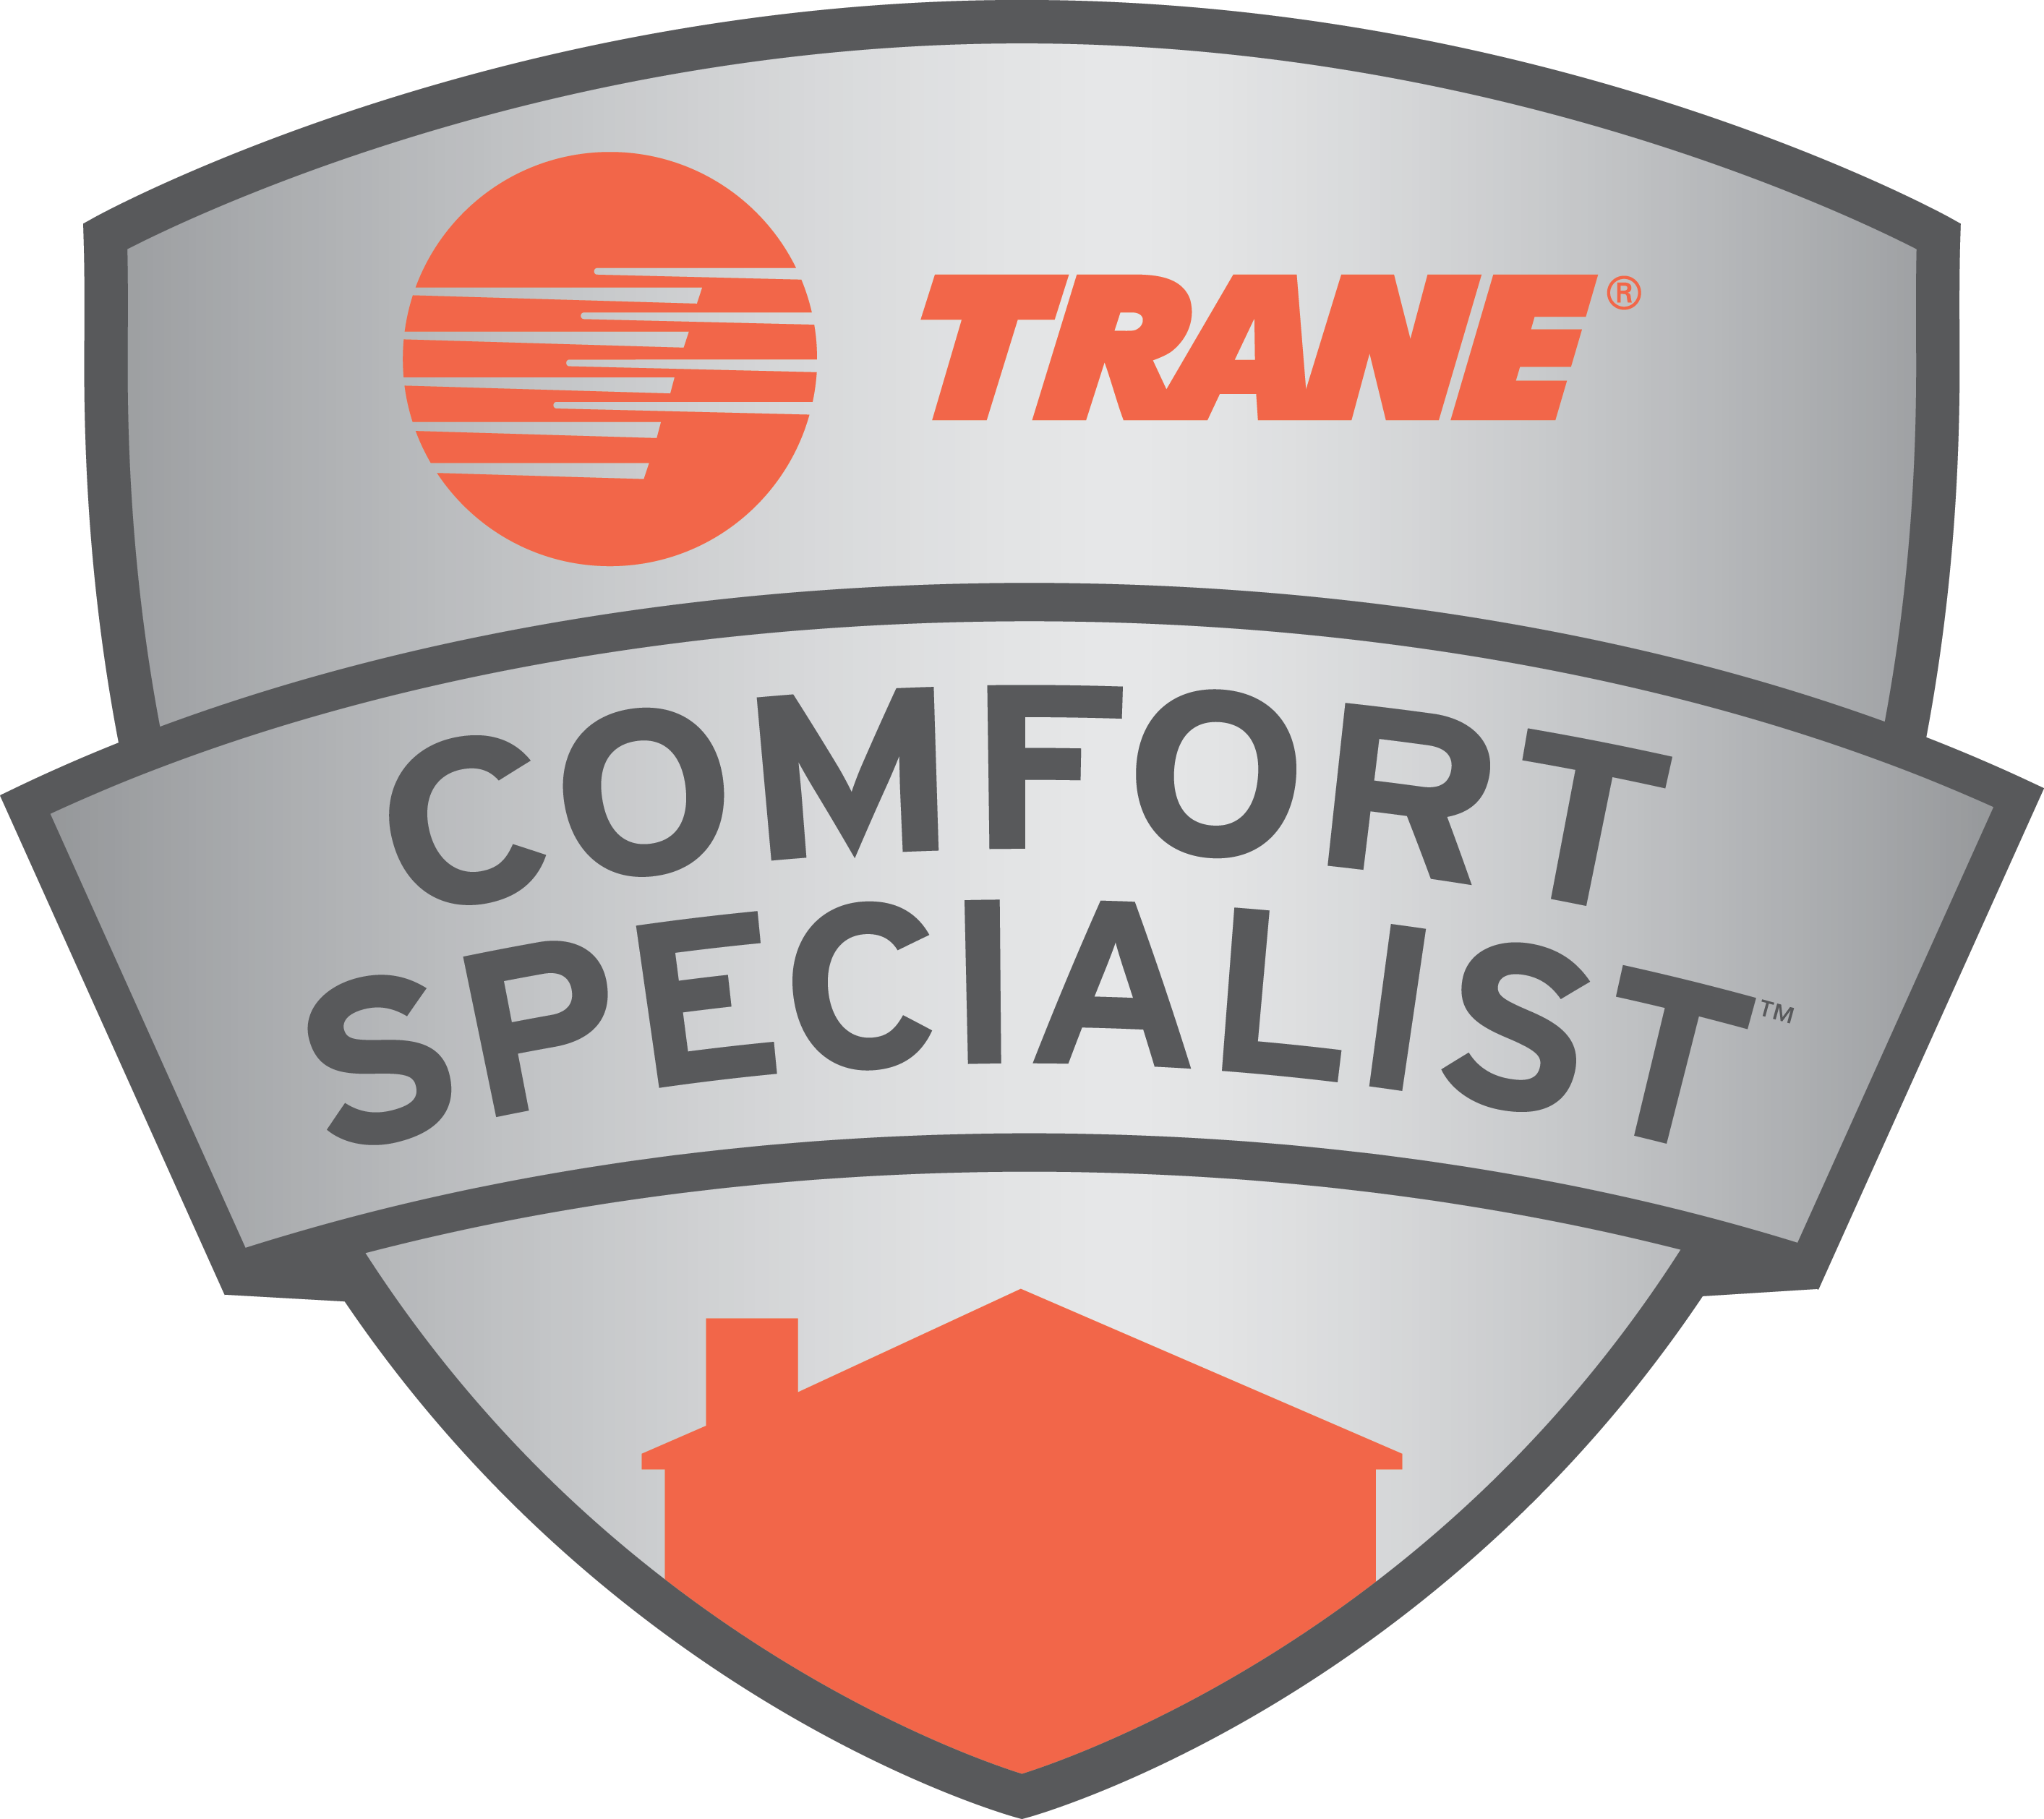 661-trane-comfort-specialist.png